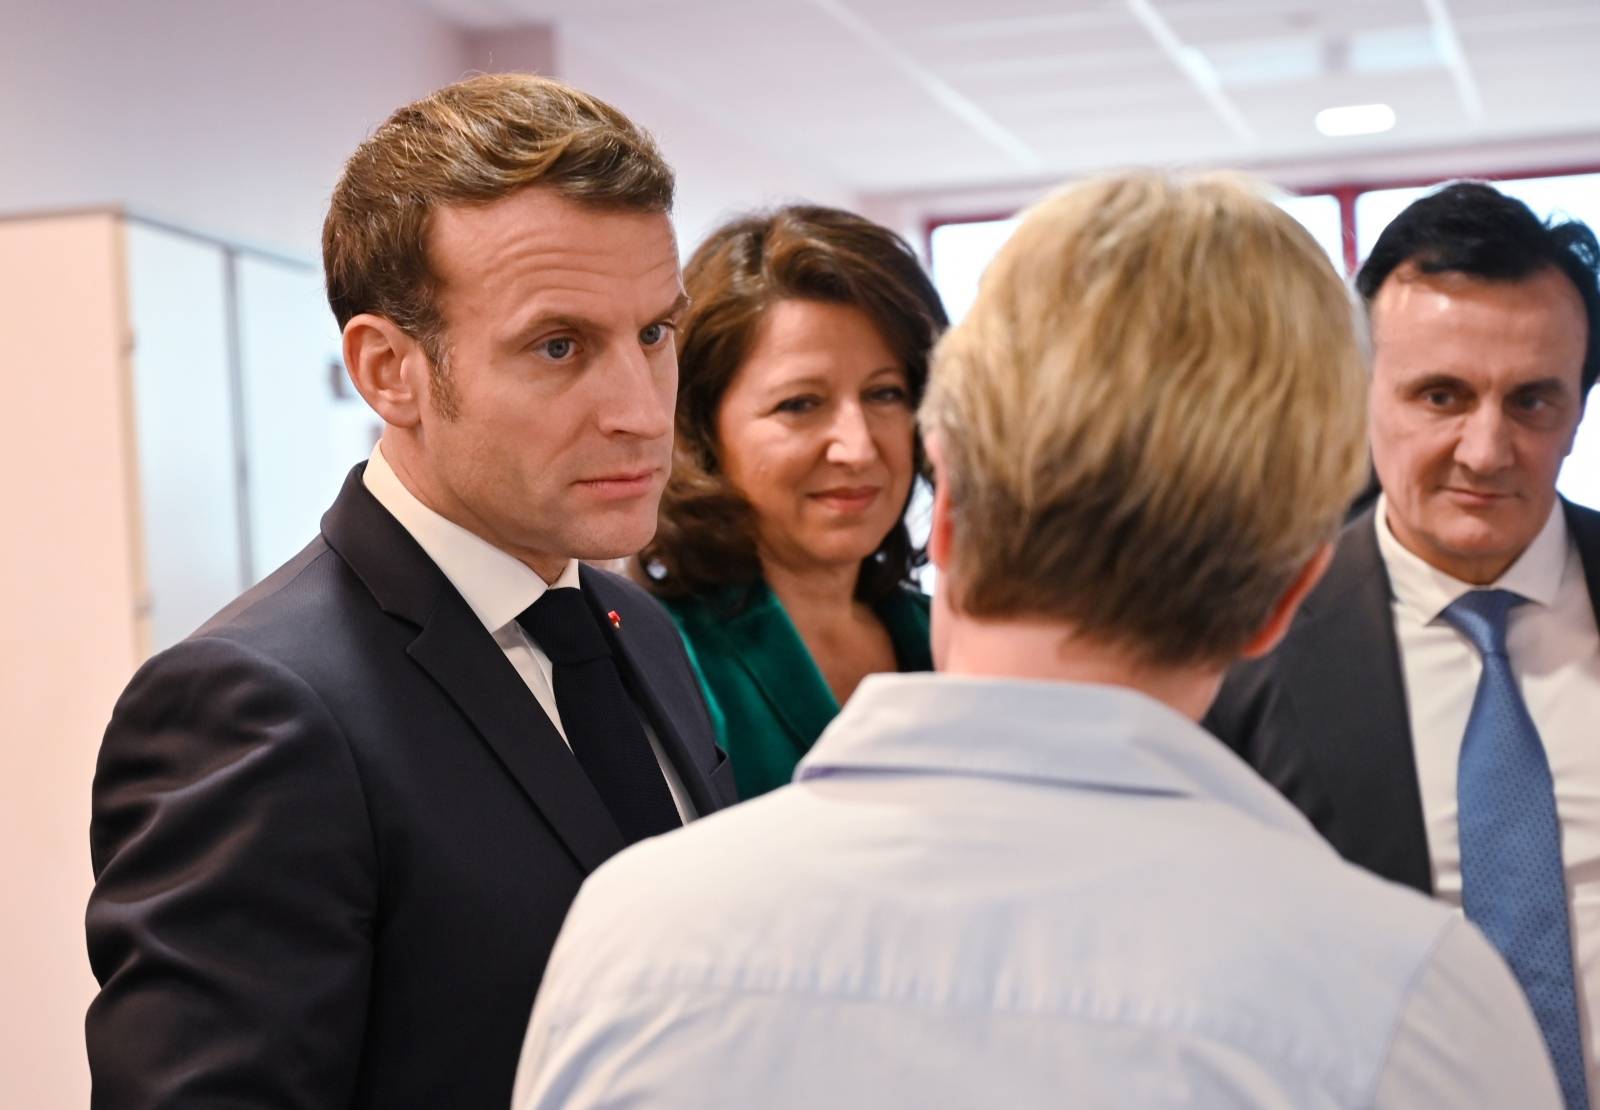 French President Emmanuel Macron visits AstraZeneca factory in Dunkirk